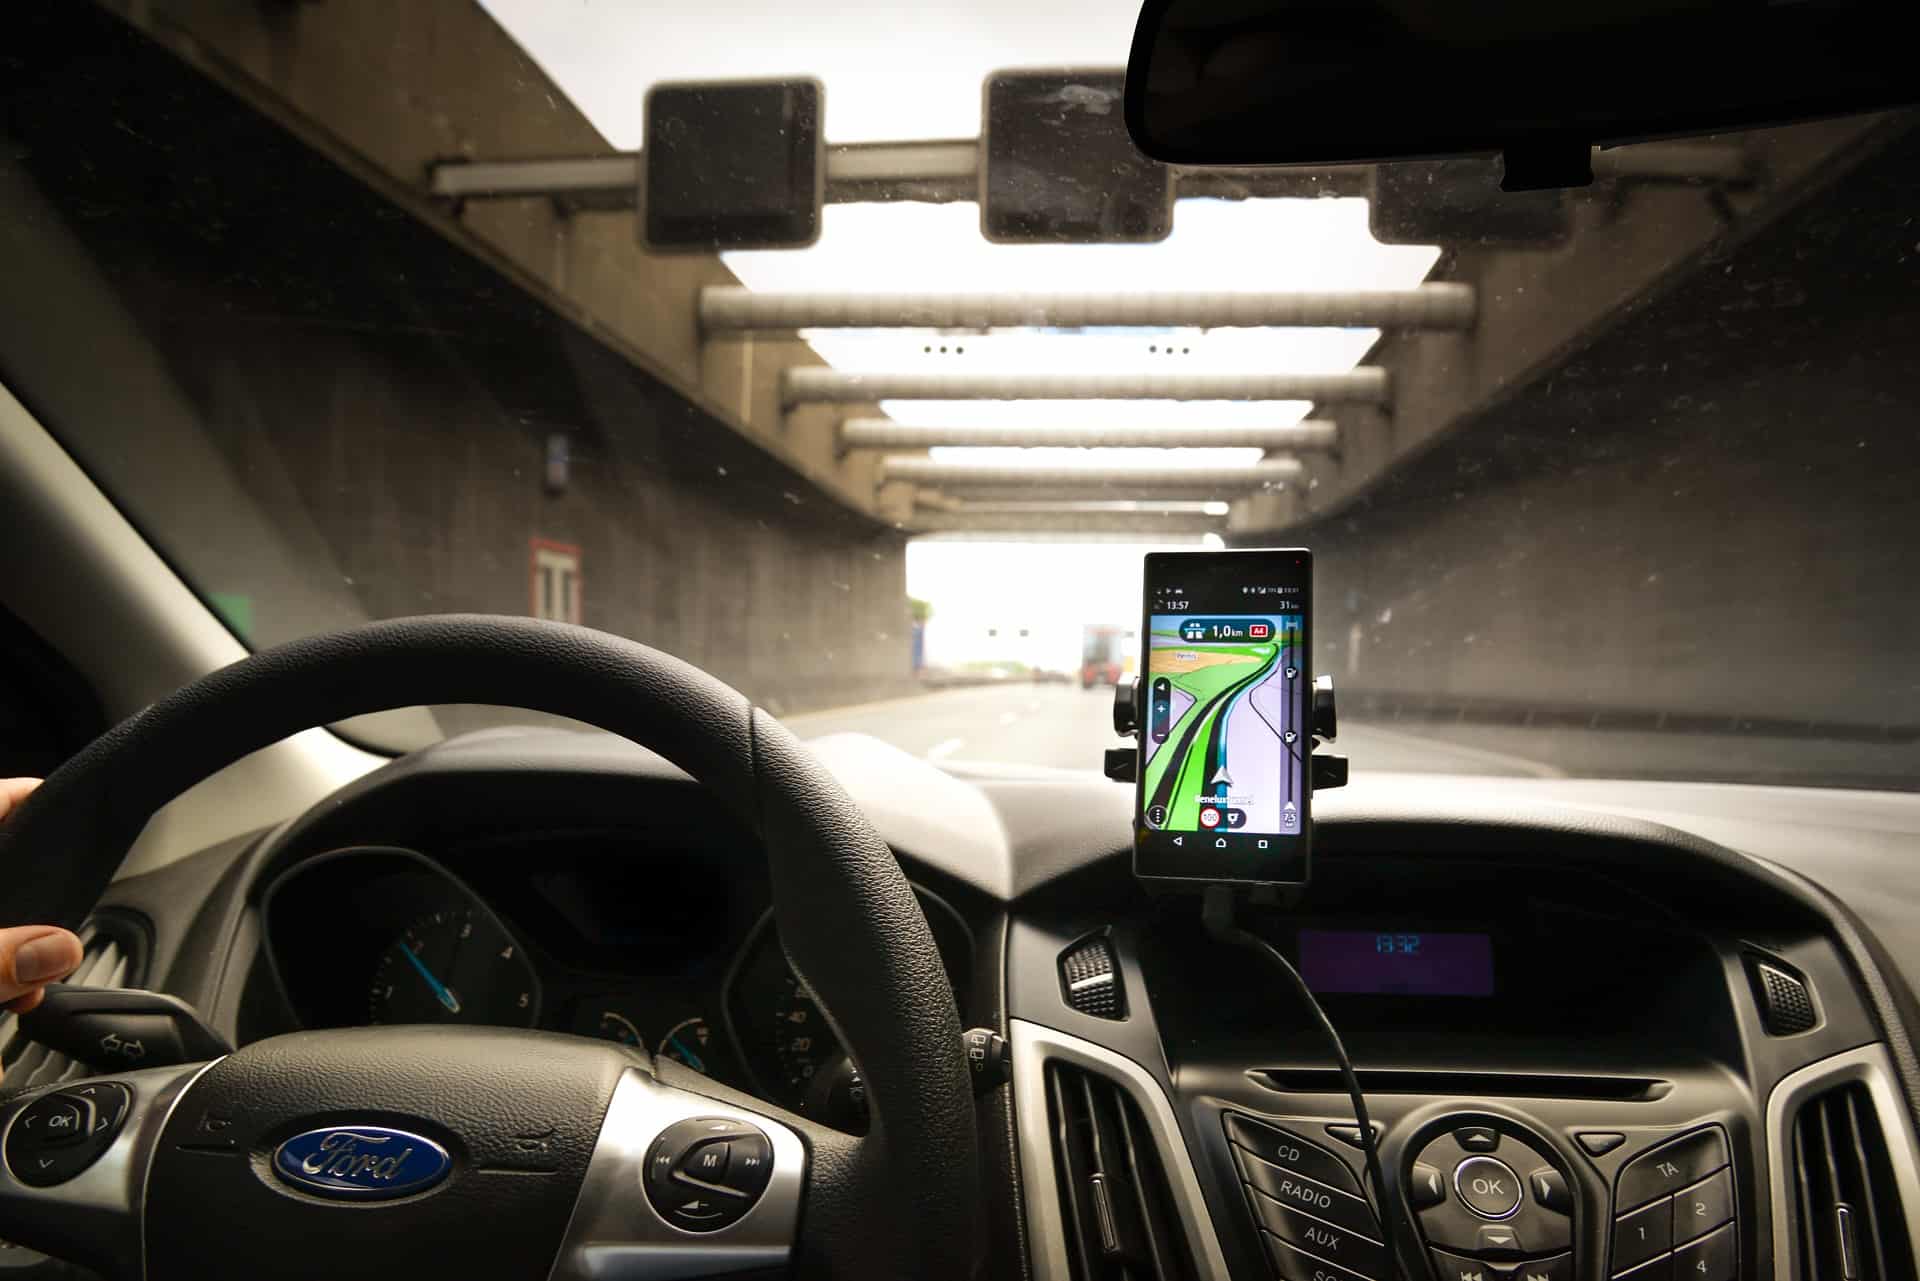 Car using smartphone for navigation